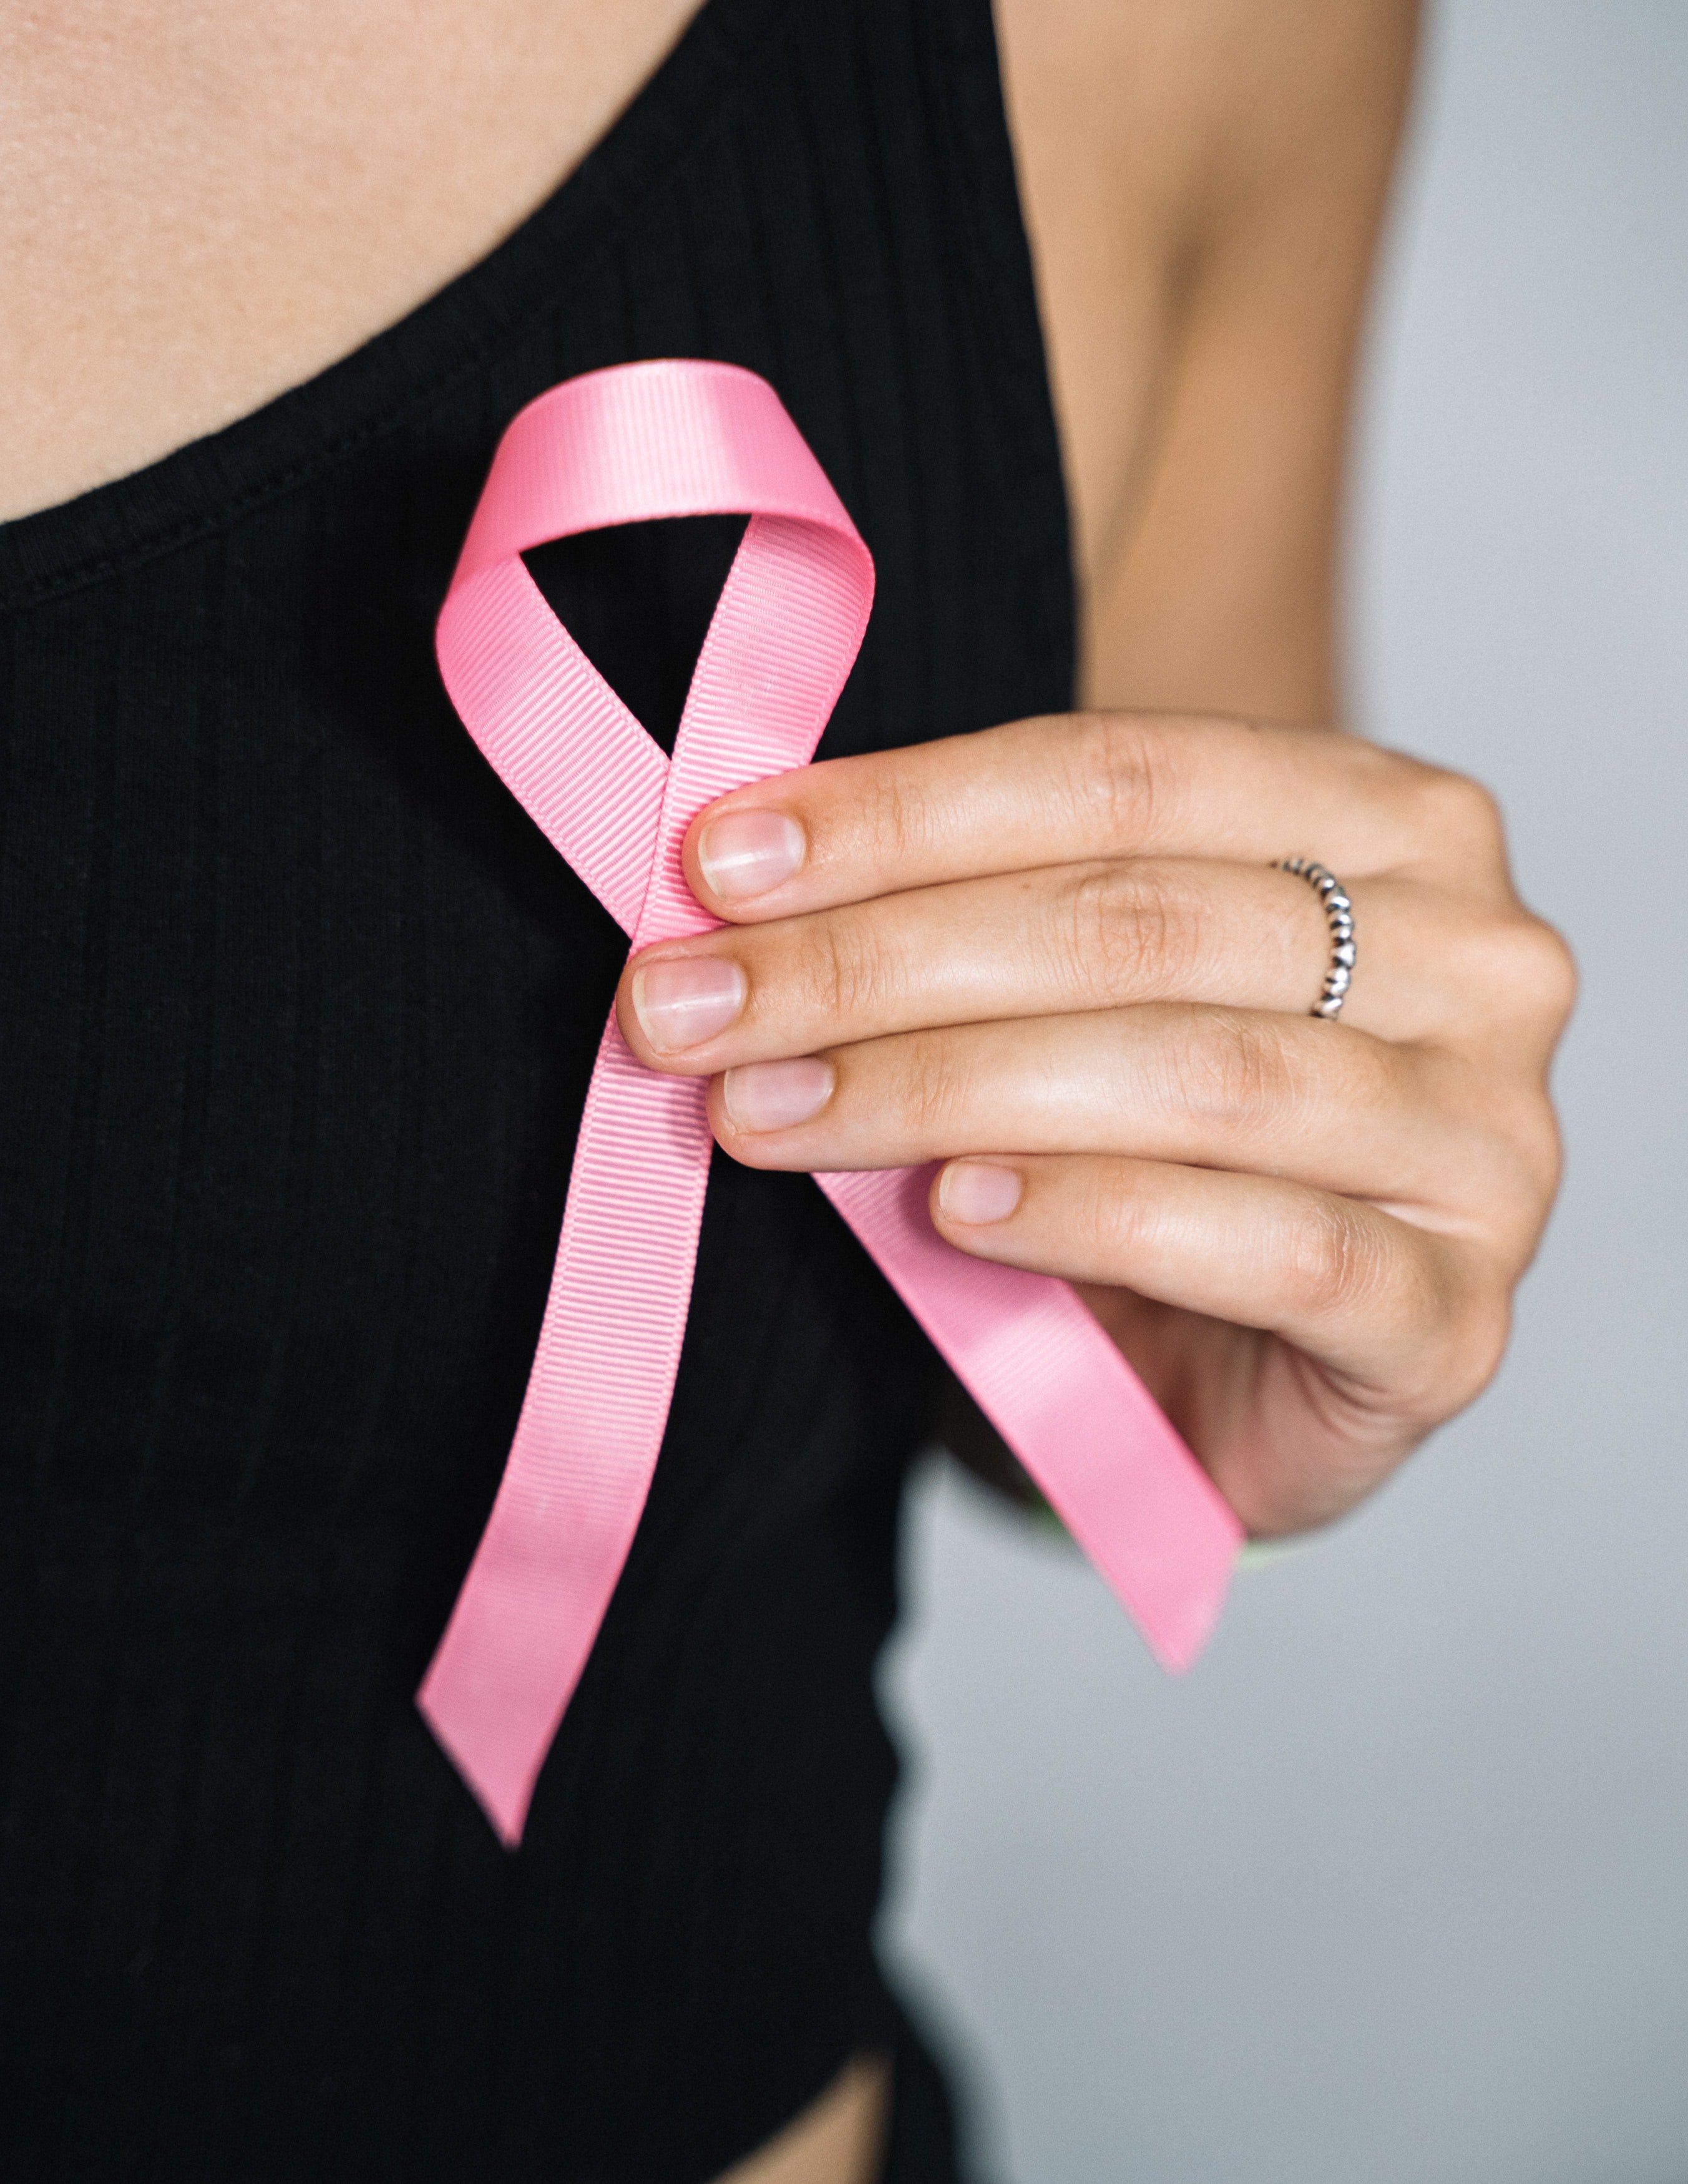 A cancer ribbon | Source: Pexels